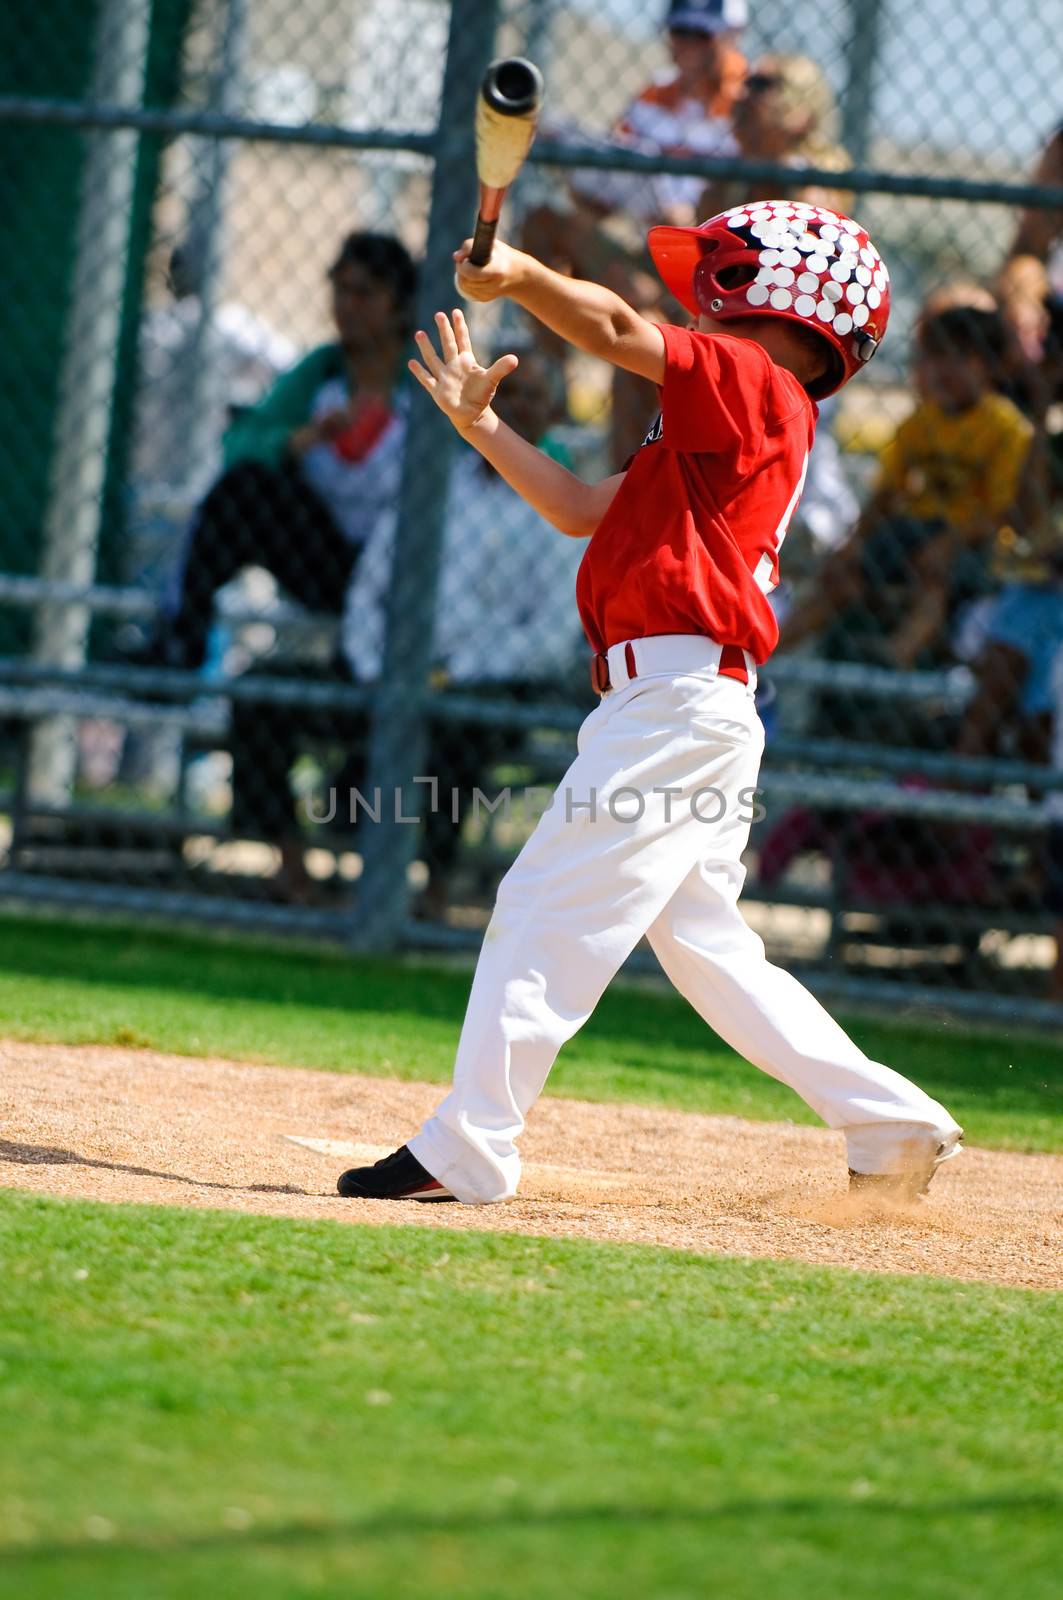 Young baseball boy swinging the bat.